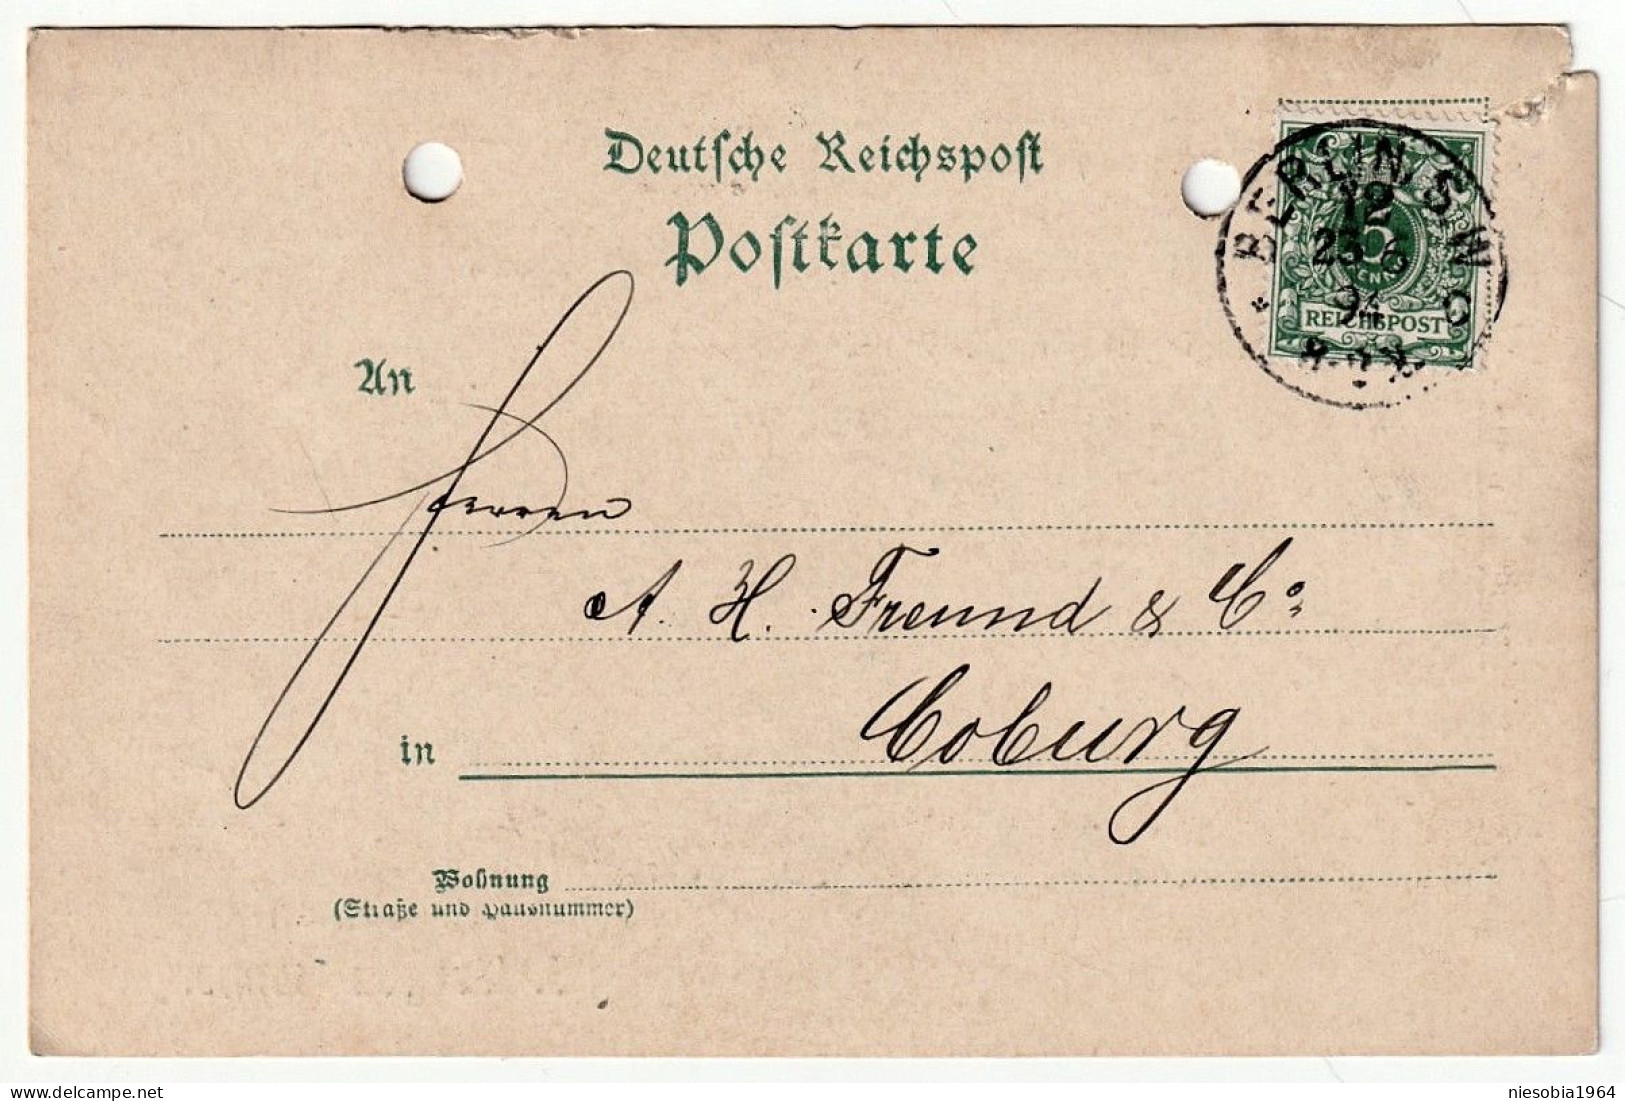 Imperial Germany Reichspost J. Bargou & Sohne. 23.06.1894 Belle-Époque Corespondenz-Karte Berlin - Cartes Postales